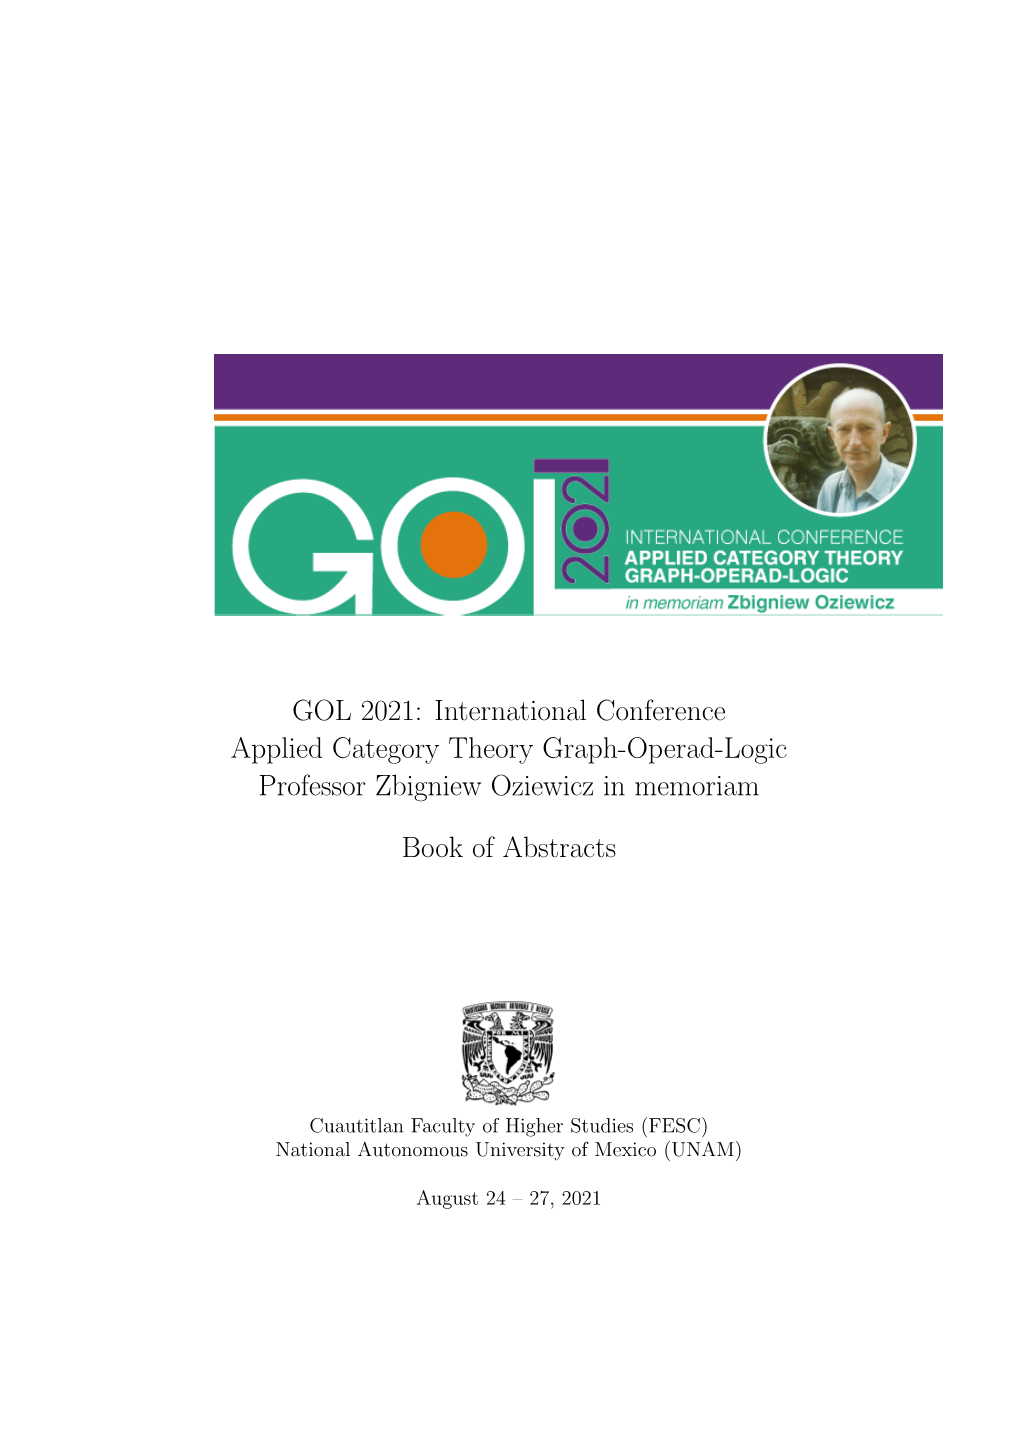 GOL 2021: International Conference Applied Category Theory Graph-Operad-Logic Professor Zbigniew Oziewicz in Memoriam